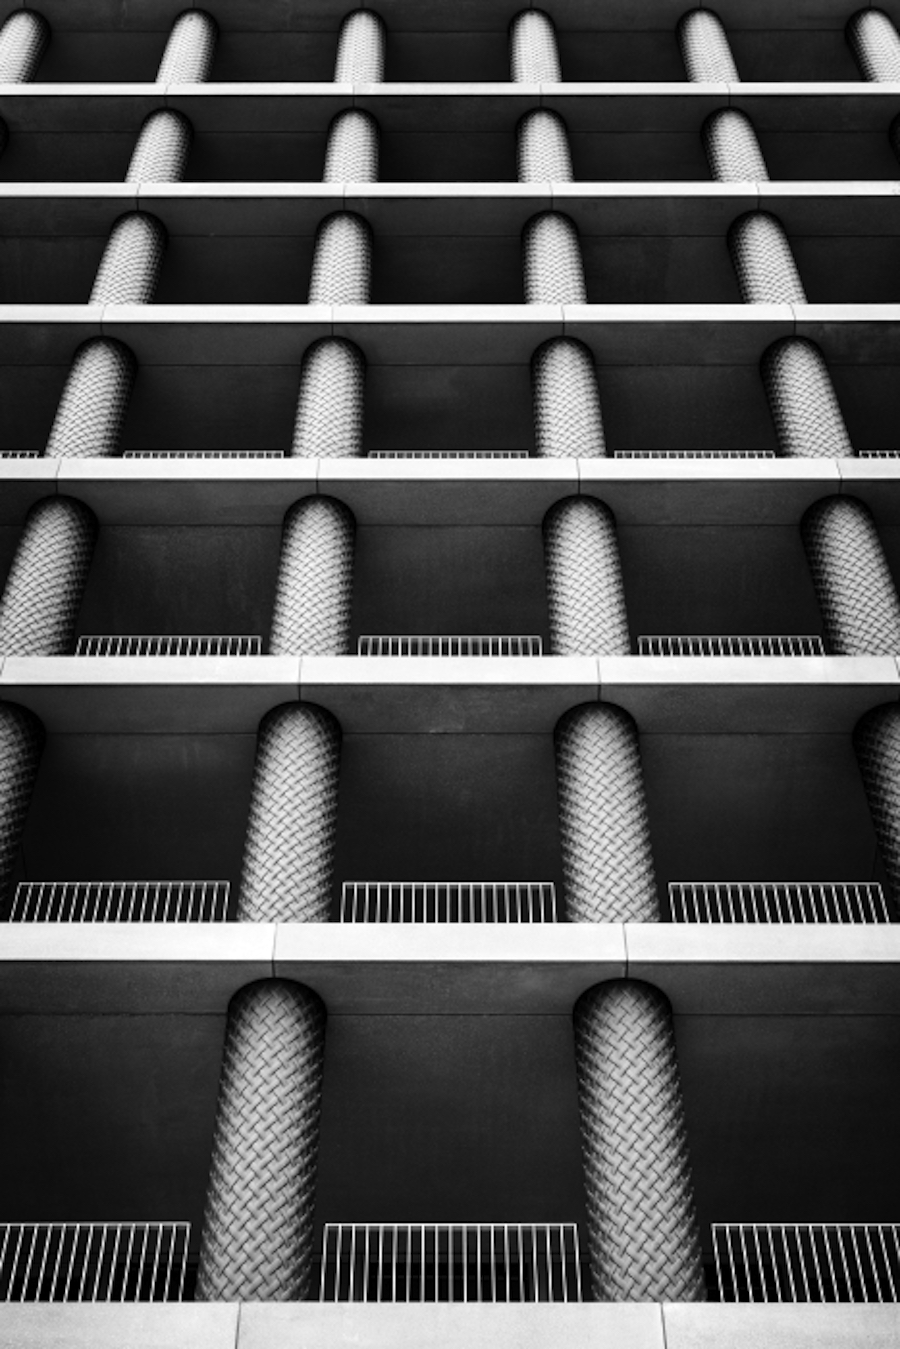 Superb Symmetrical Architecture Shot by EMCN10